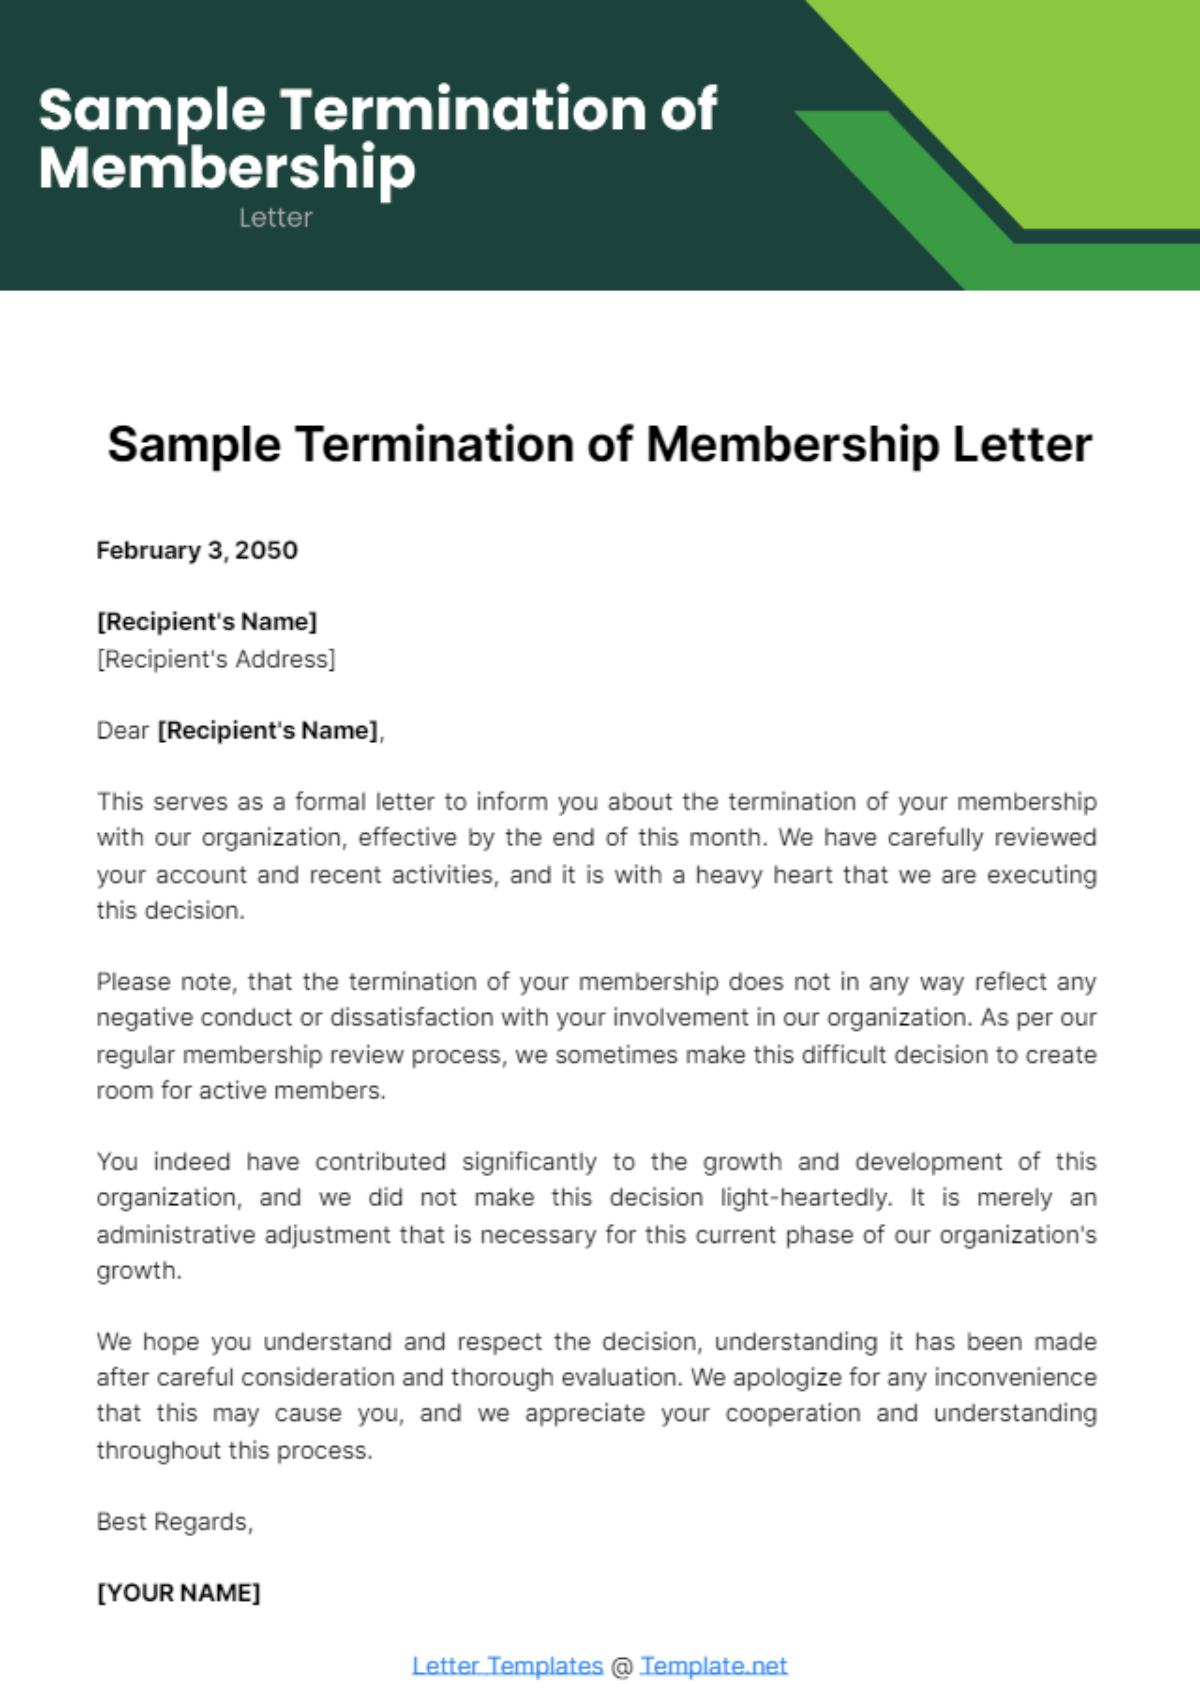 Free Sample Termination of Membership Letter Template